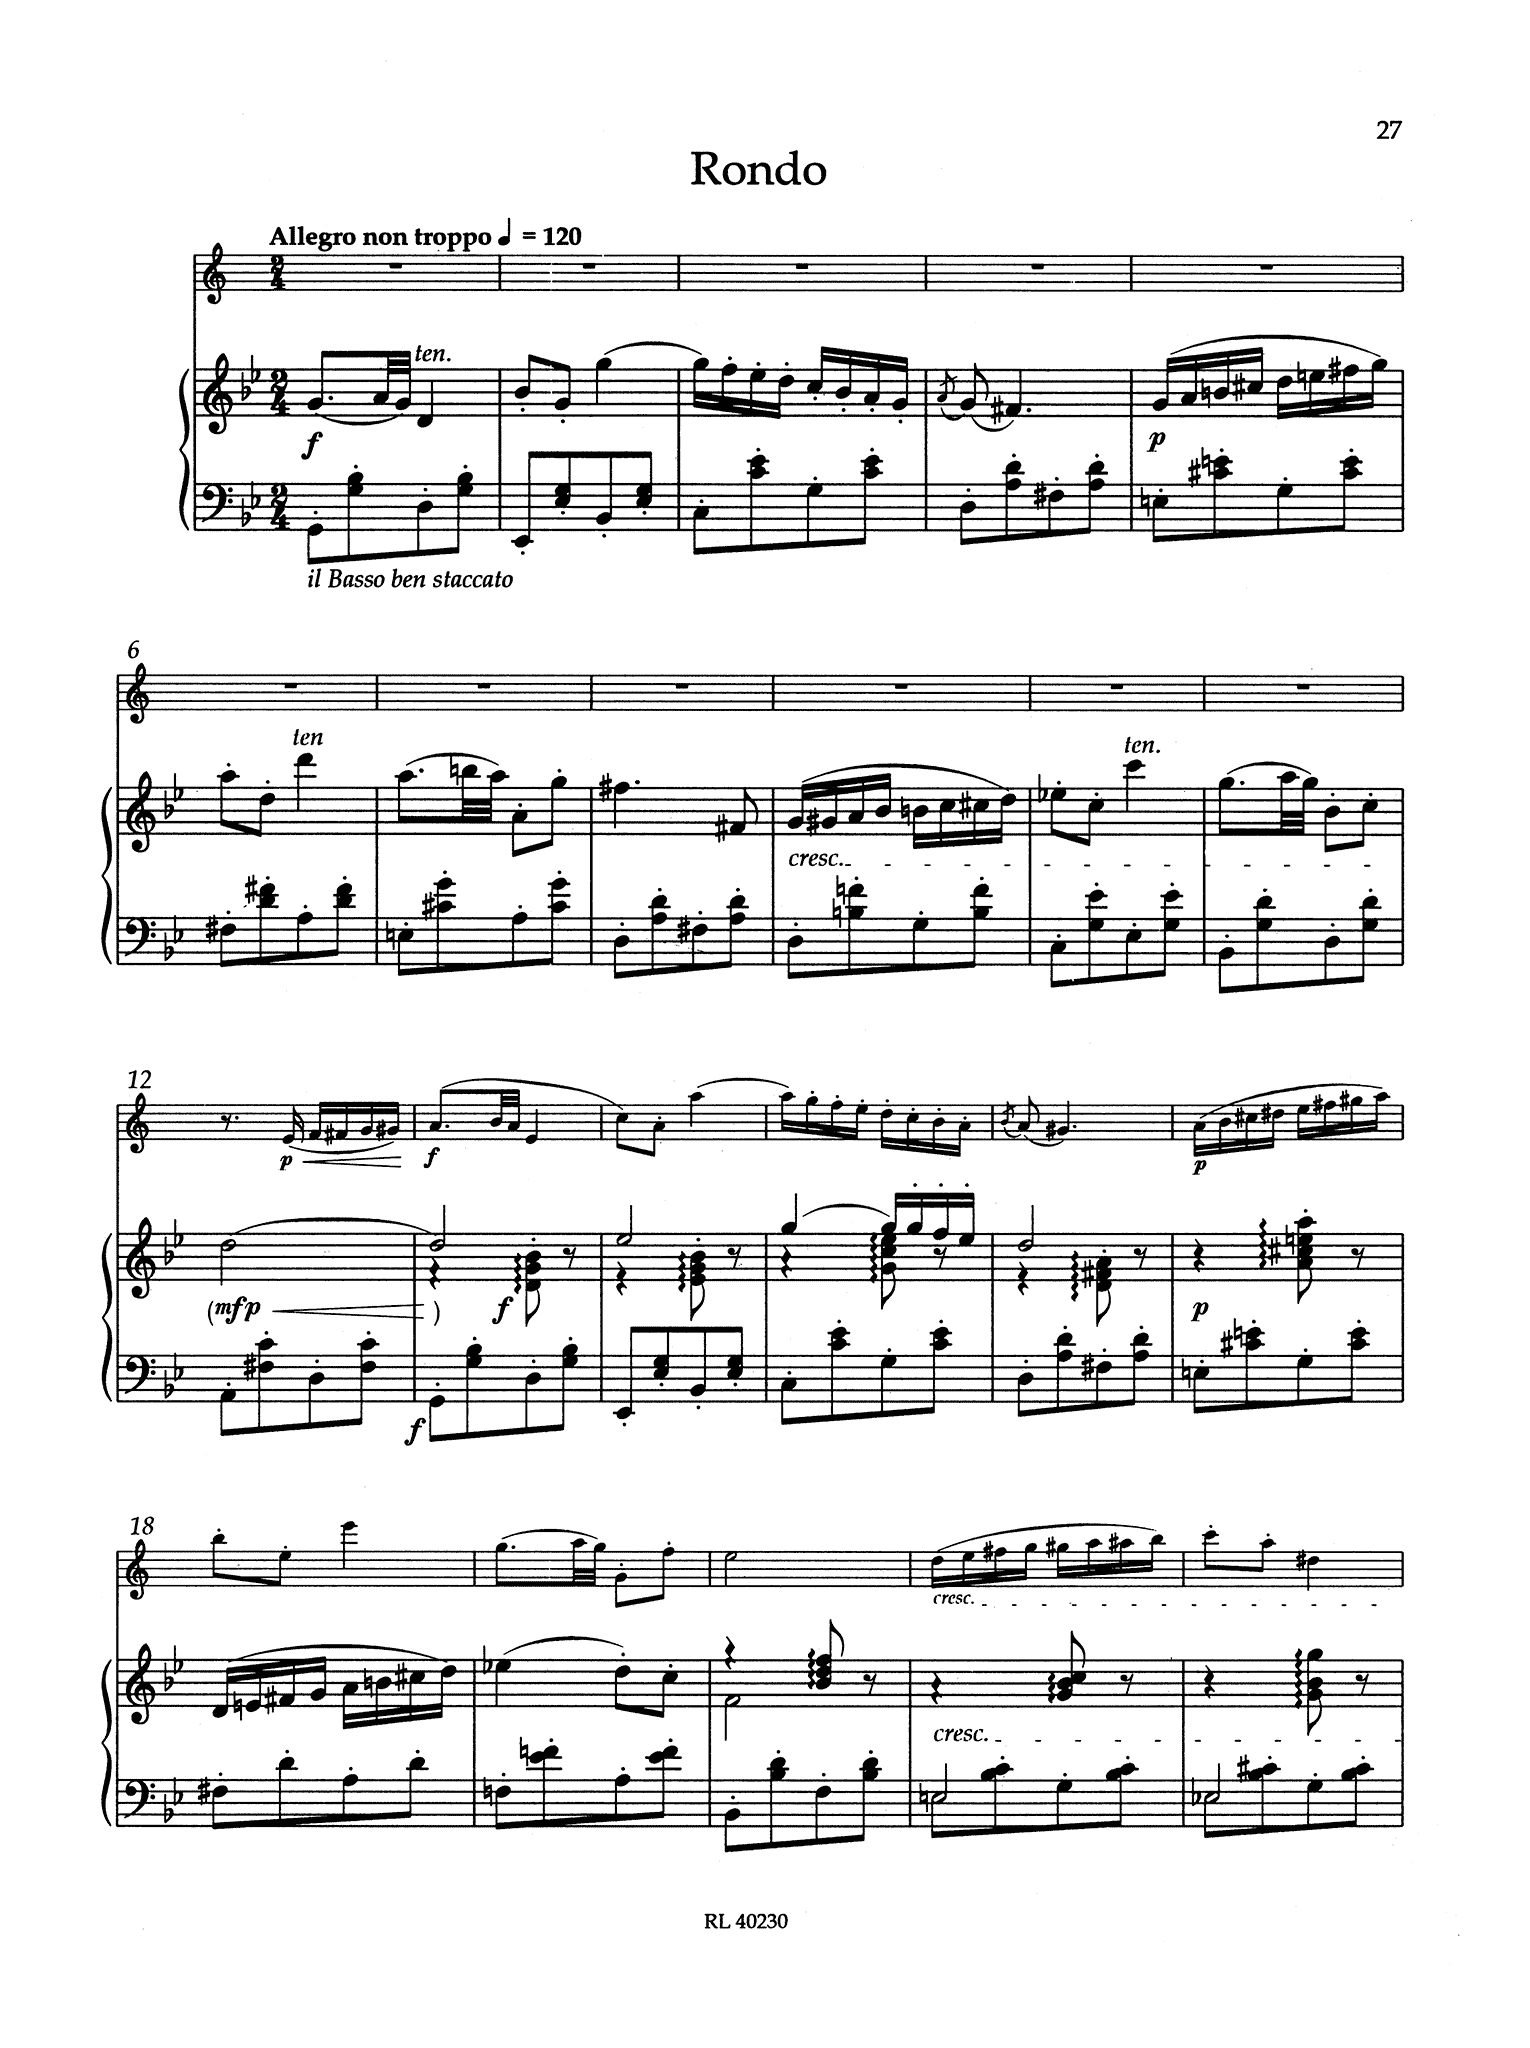 Gouvy Clarinet Sonata, Op. 67 - Movement 3